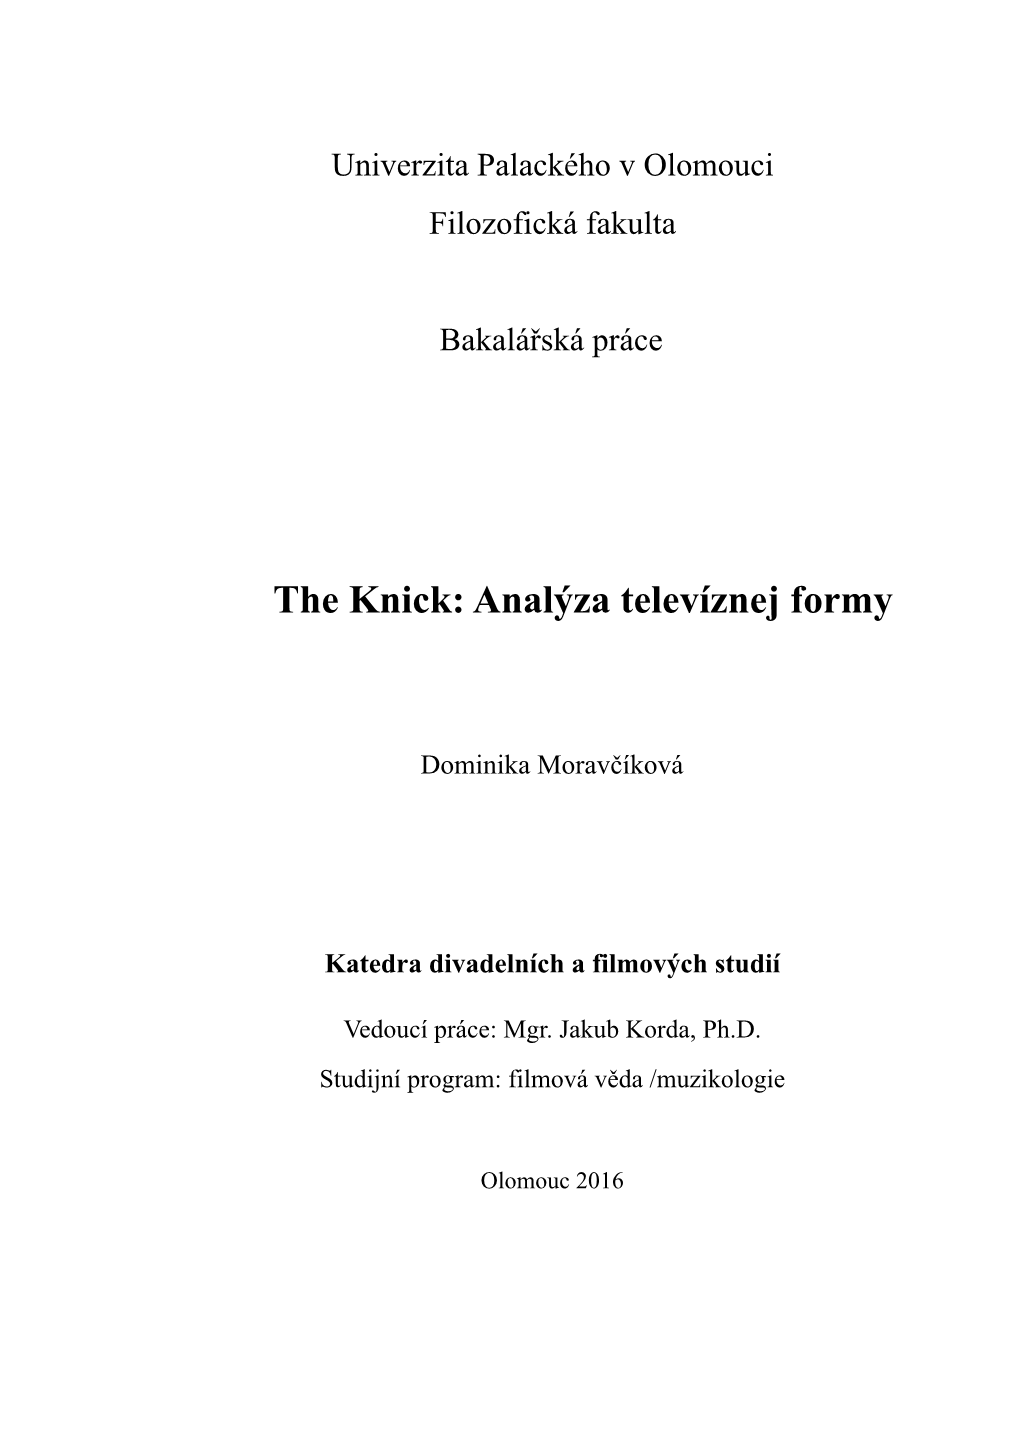 The Knick: Analýza Televíznej Formy